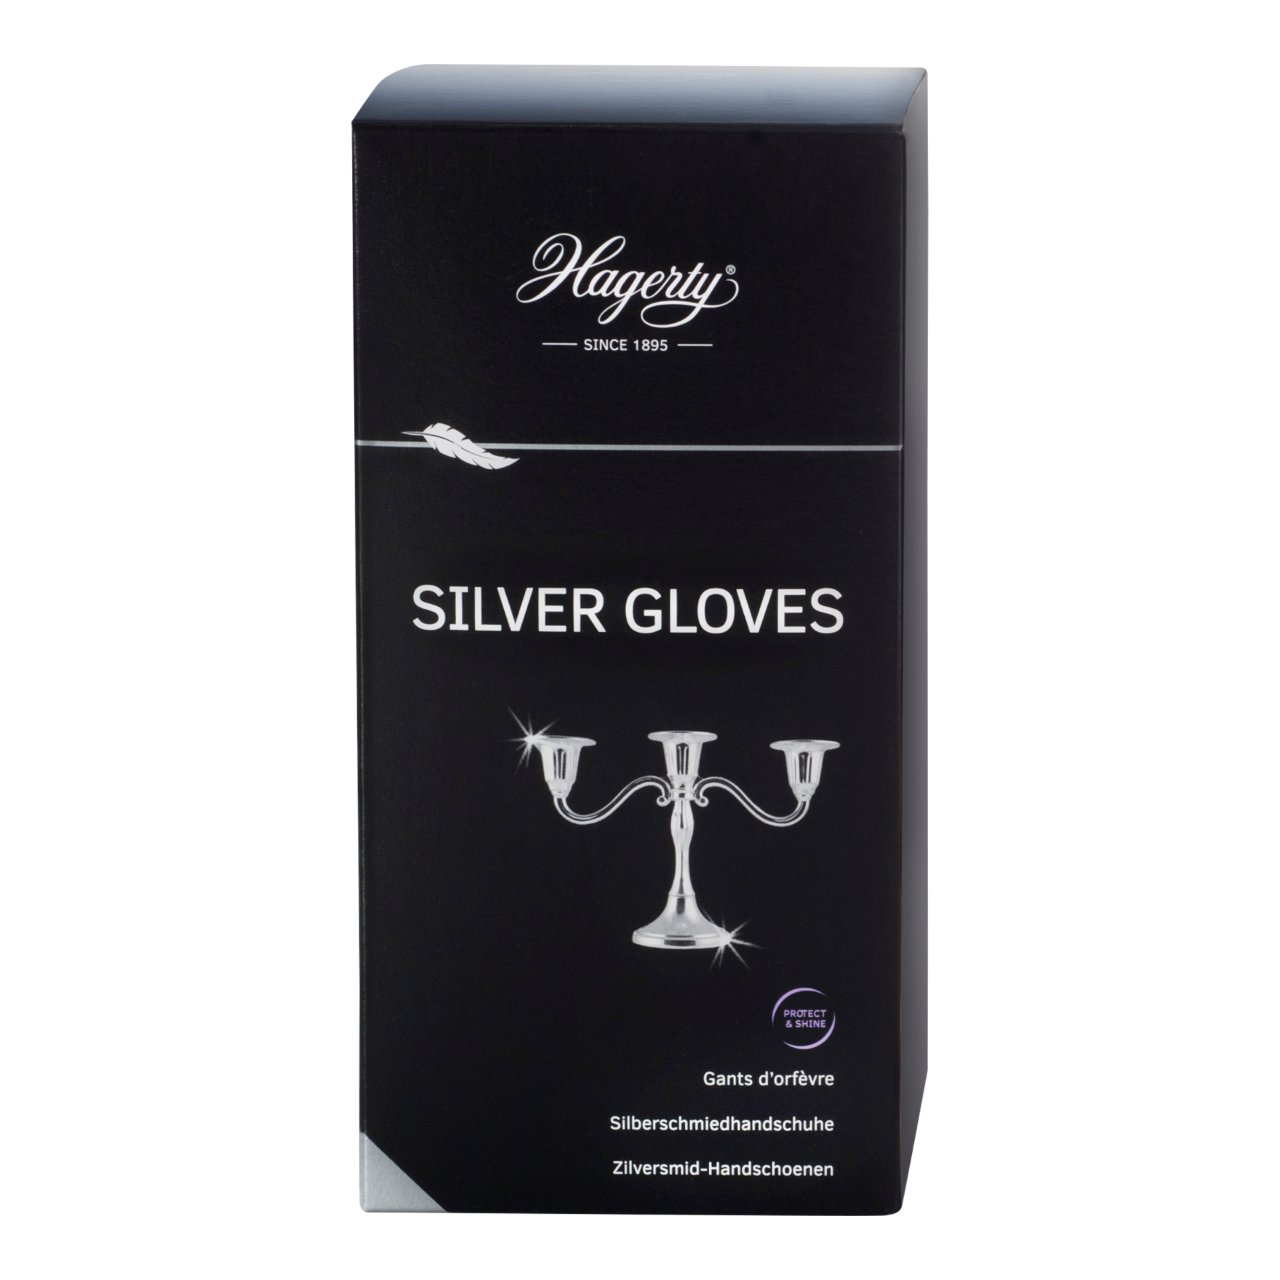 Silver gloves